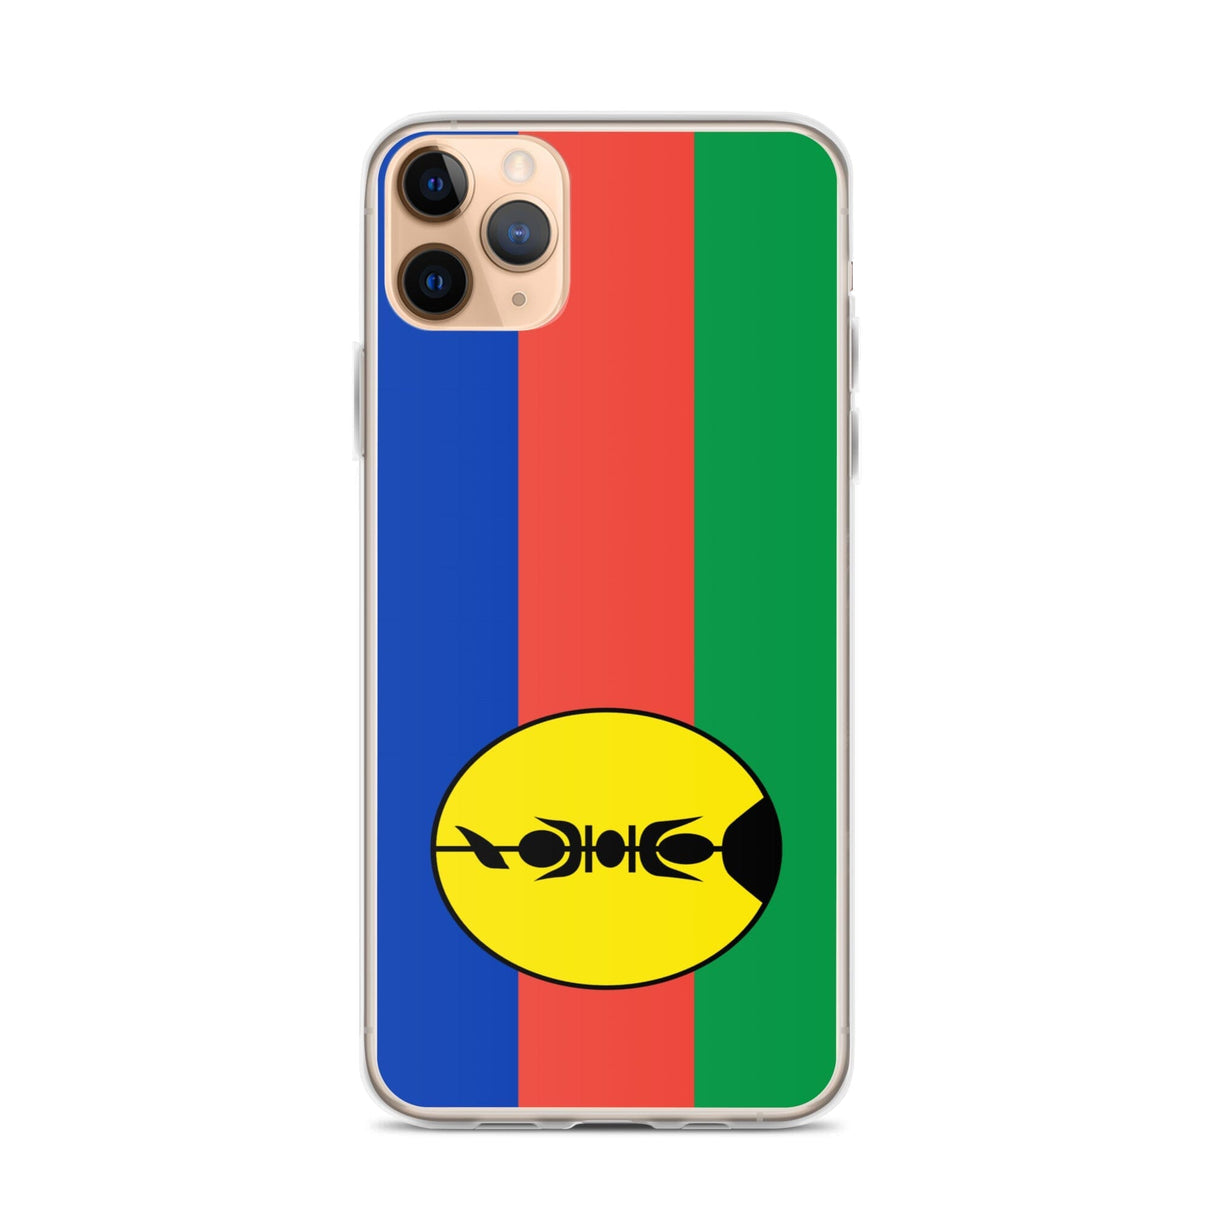 Flags of New Caledonia iPhone Case - Pixelforma